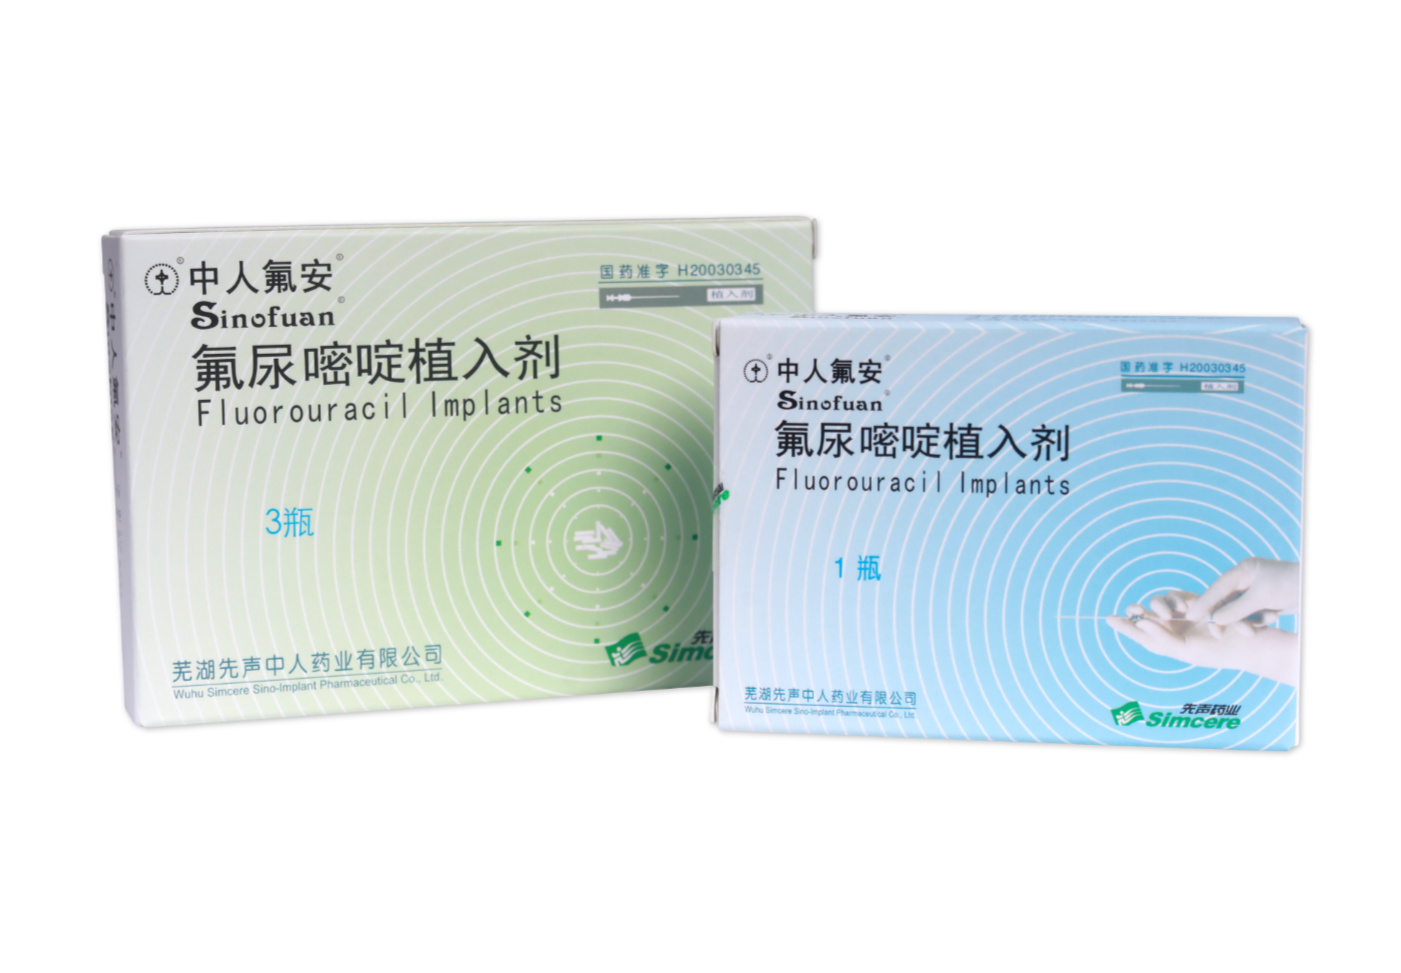 Sinofuan®：Fluorouracil Implants